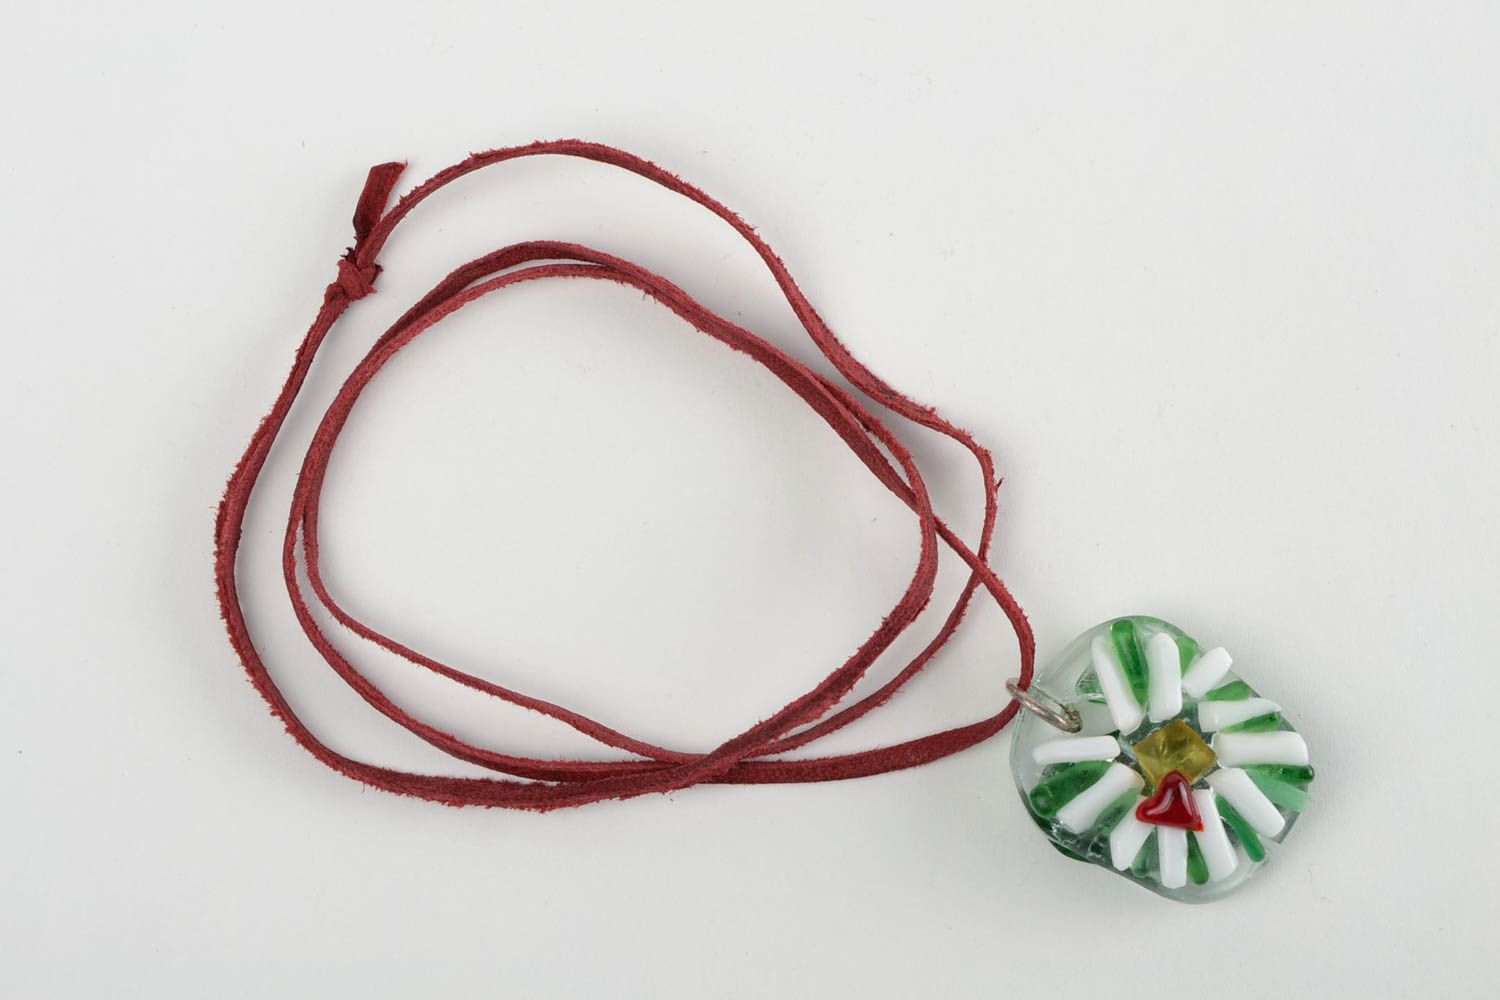 Handmade pendant designer pendant unusual accessory gift ideas glass jewelry photo 1